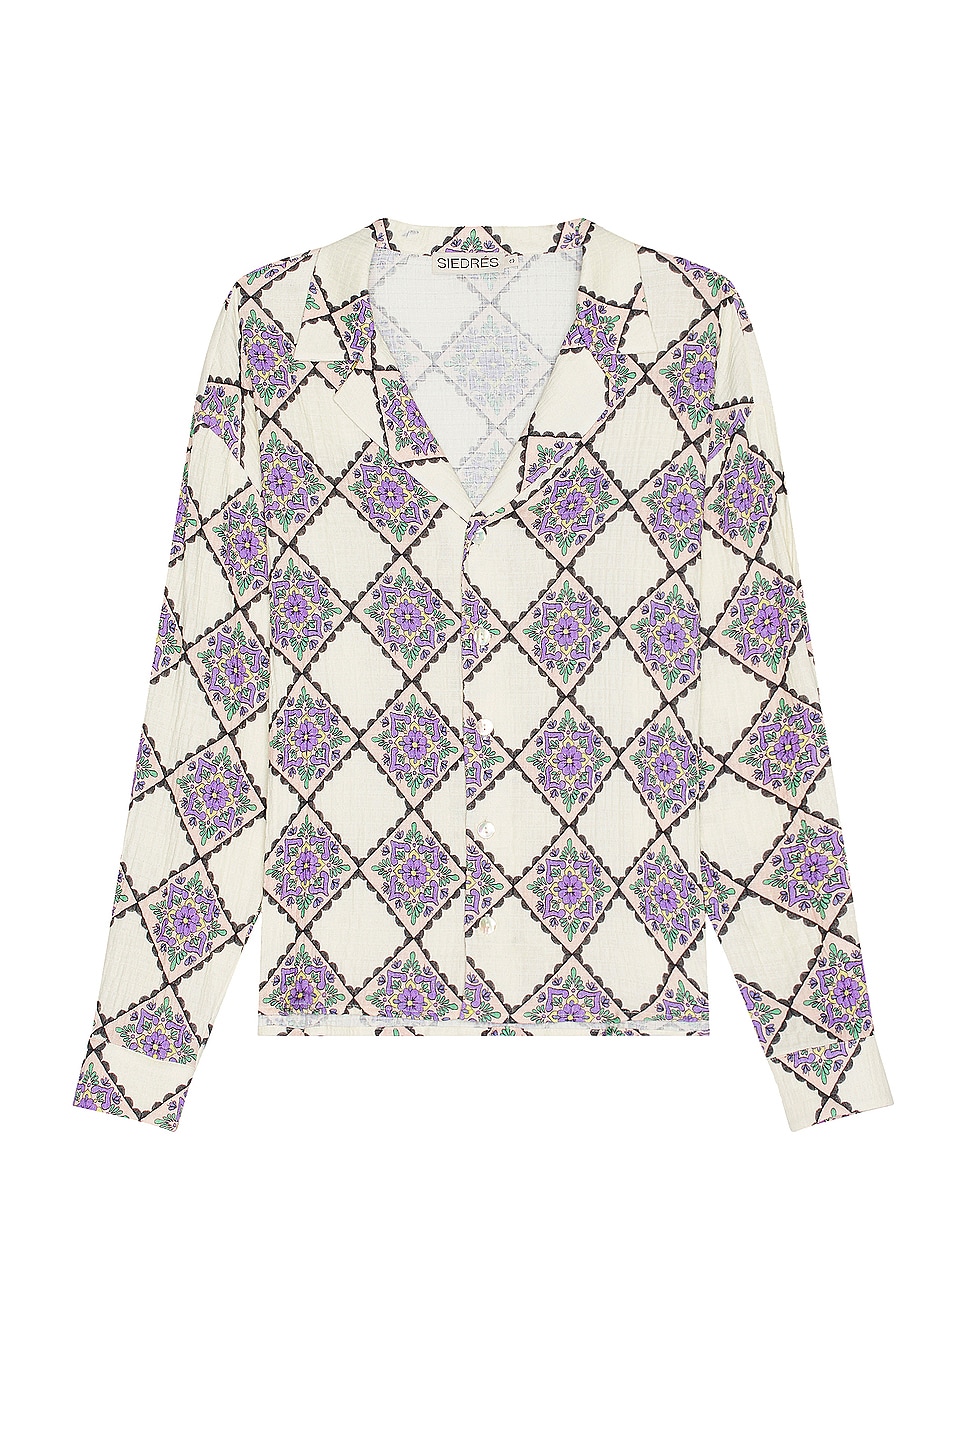 Image 1 of SIEDRES Henry Resort Collar Printed Long Sleeve Shirt in Multi